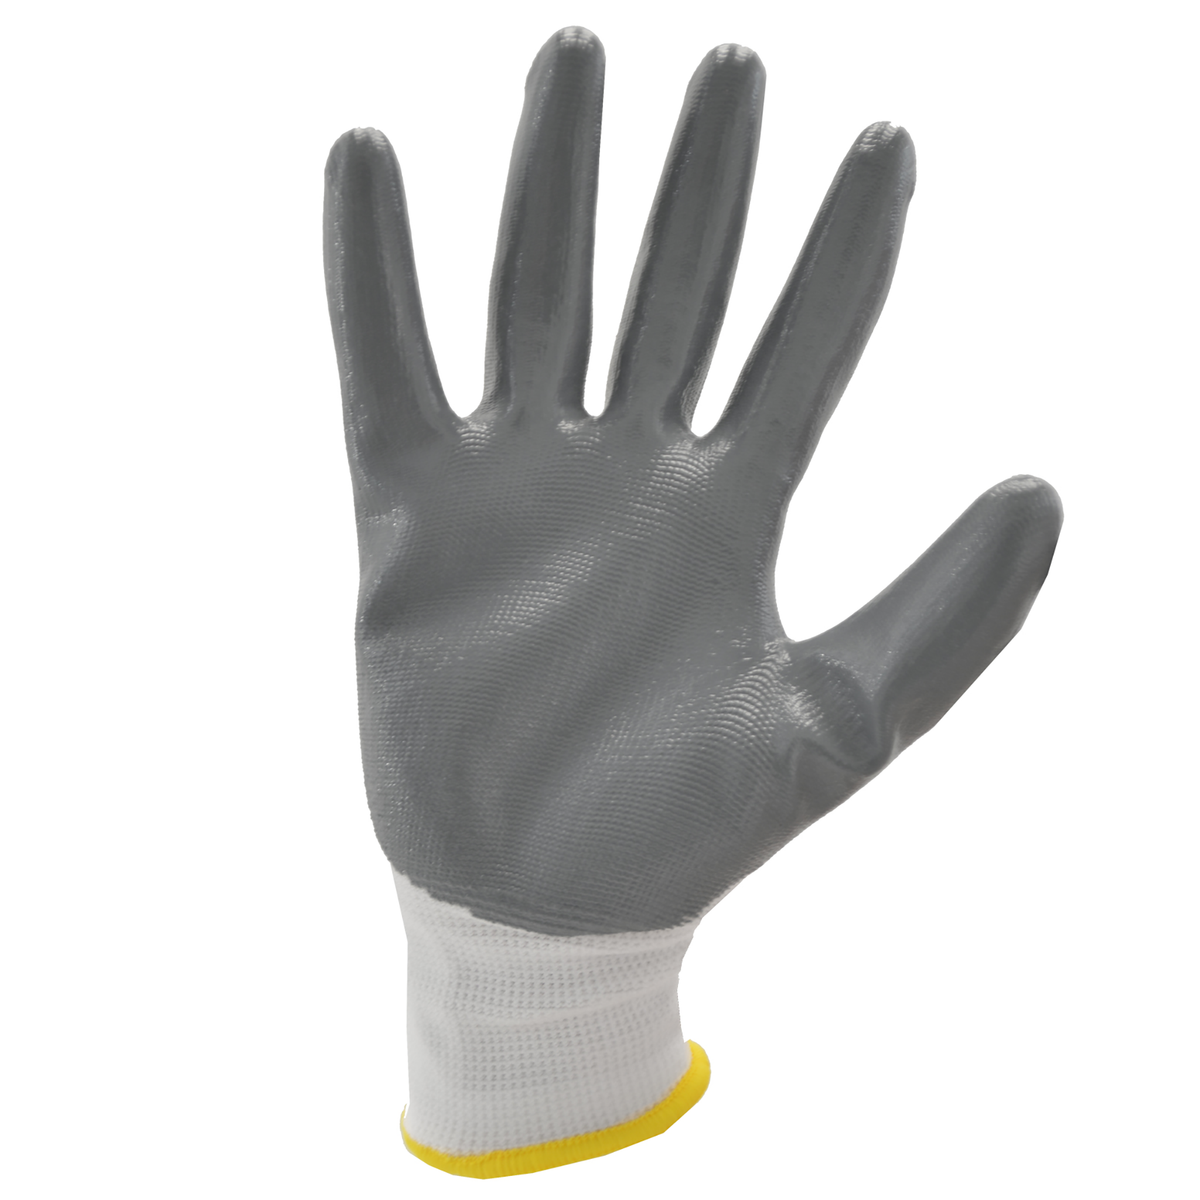 ANDANDA Safety Work Gloves, Anti-Slip PU Coated Gardening Gloves for  Digging, Weeding for Men, Breathability, Warehouse, Garden, Purple Nitrile  White Dip Gray Palm Dip NBR Grip 15N WG 48 Yards - Coupon